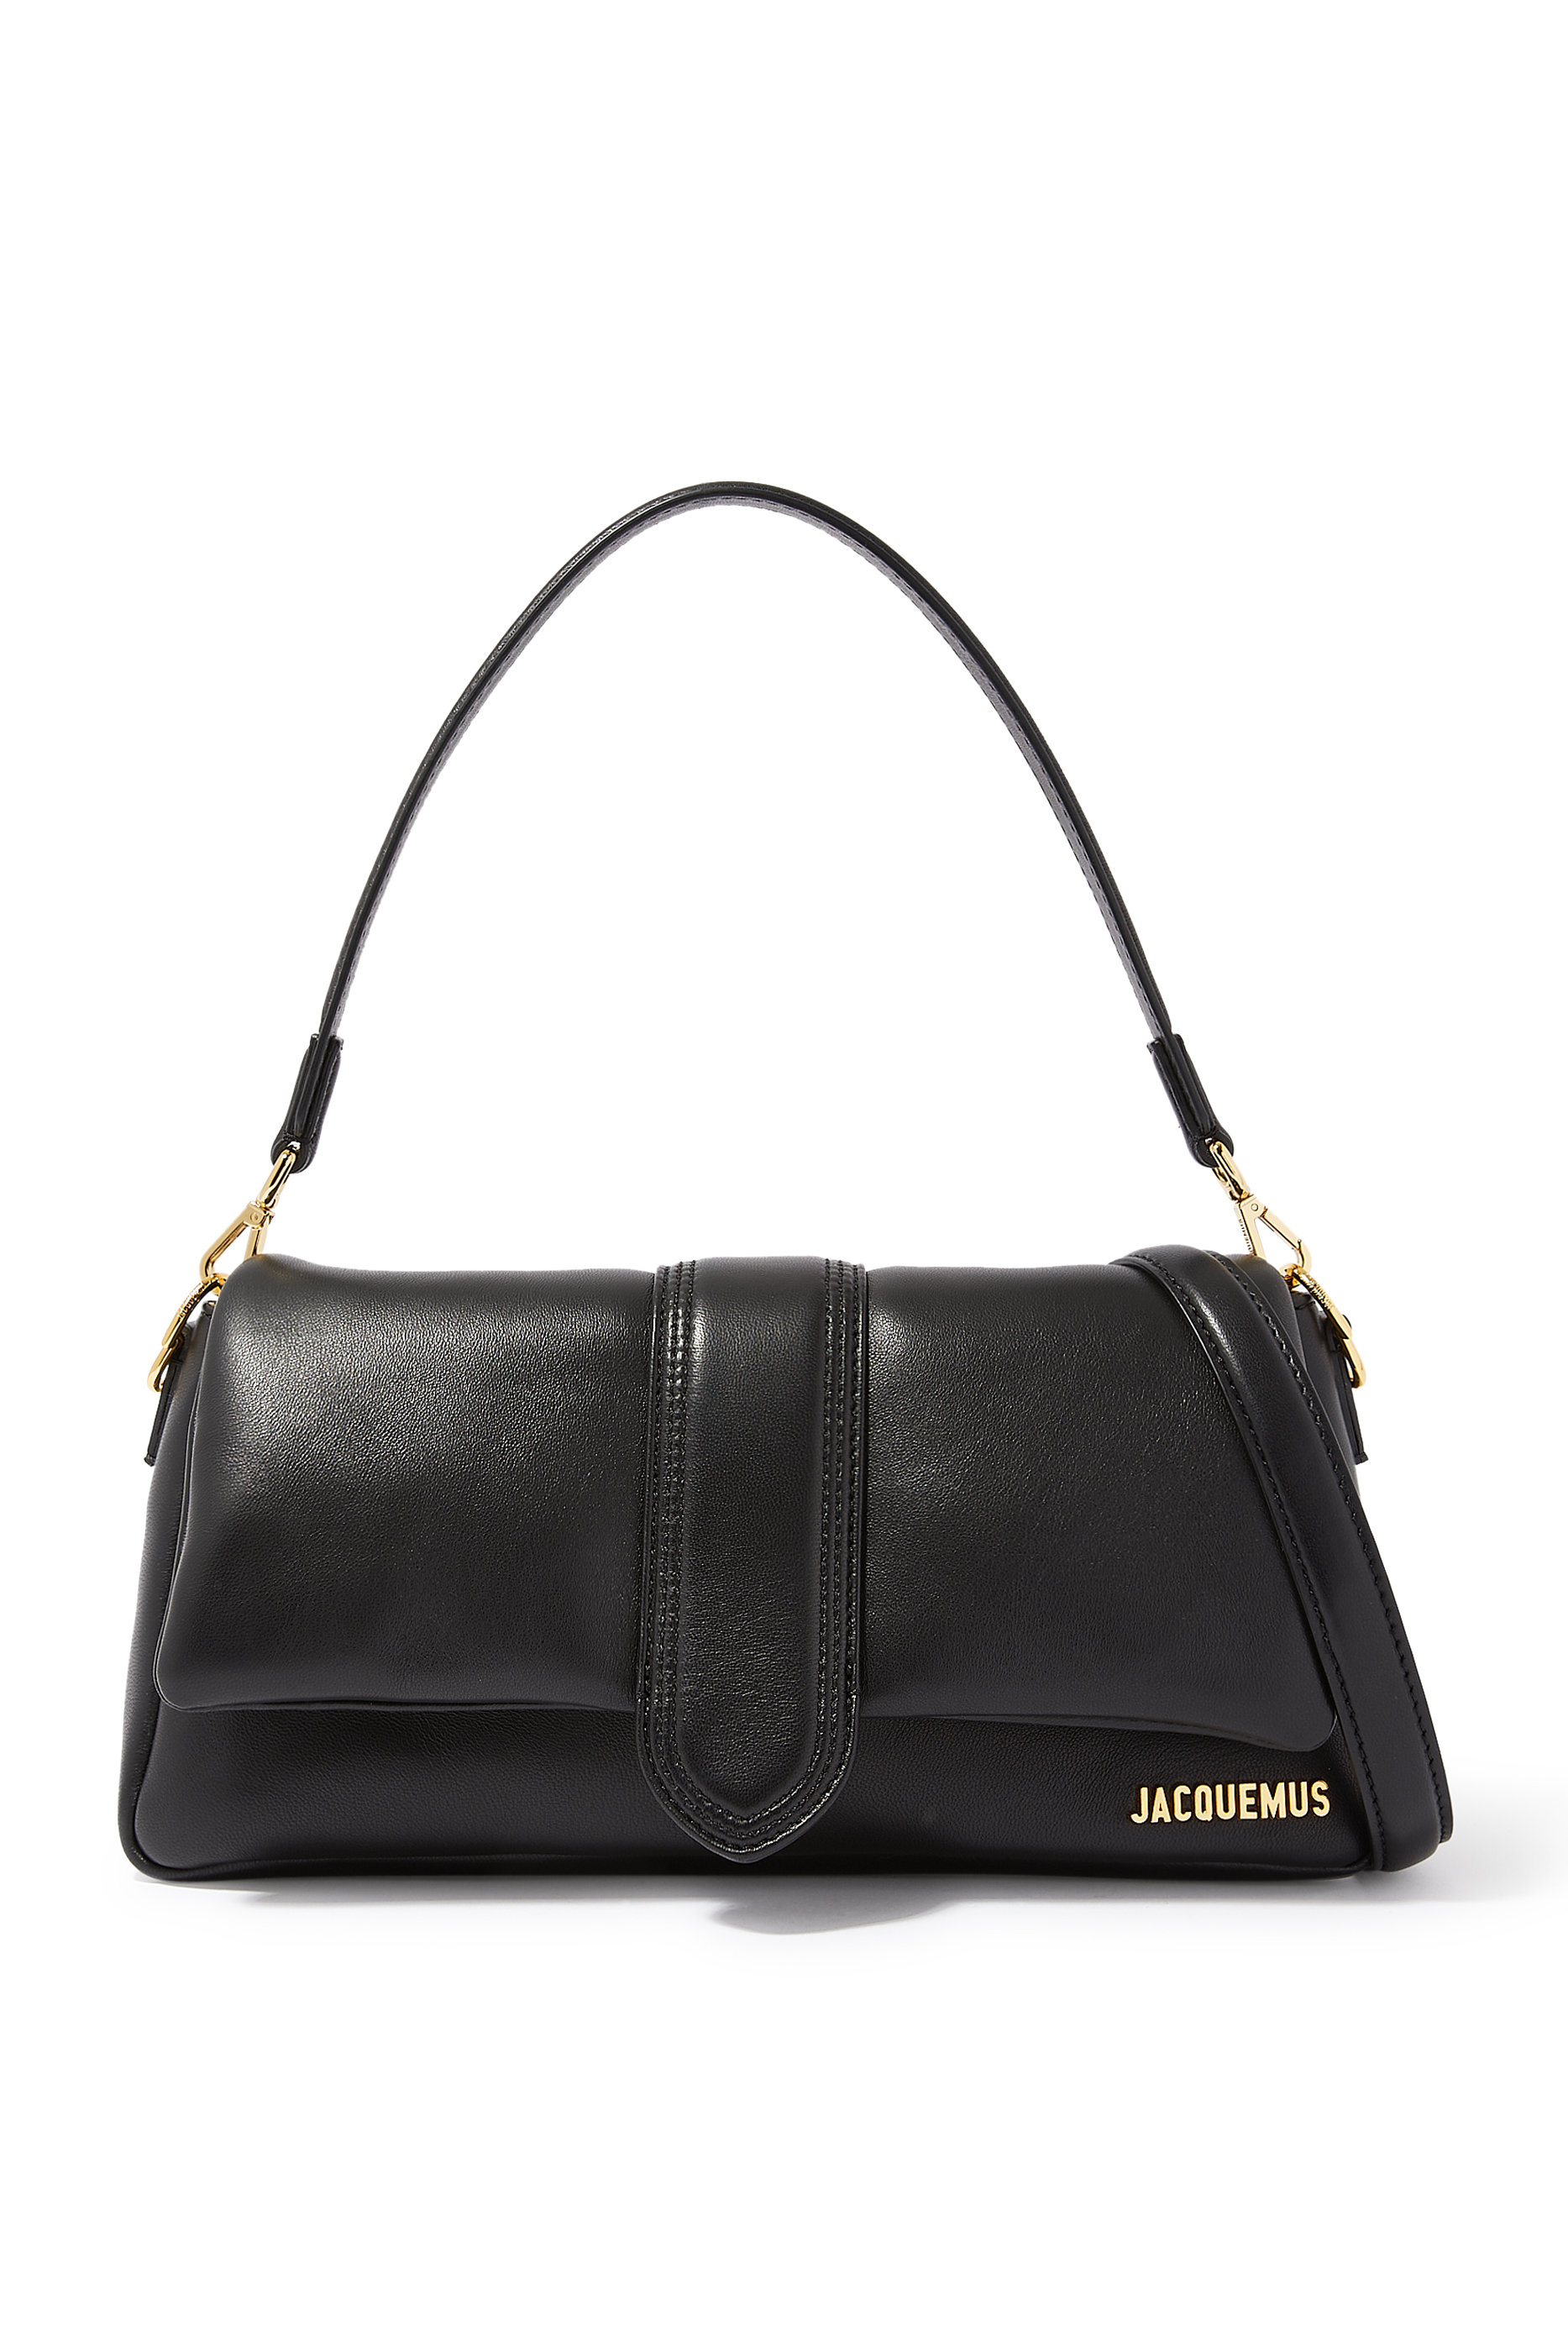 Buy Jacquemus Le Bambino Bag for Womens | Bloomingdale's UAE